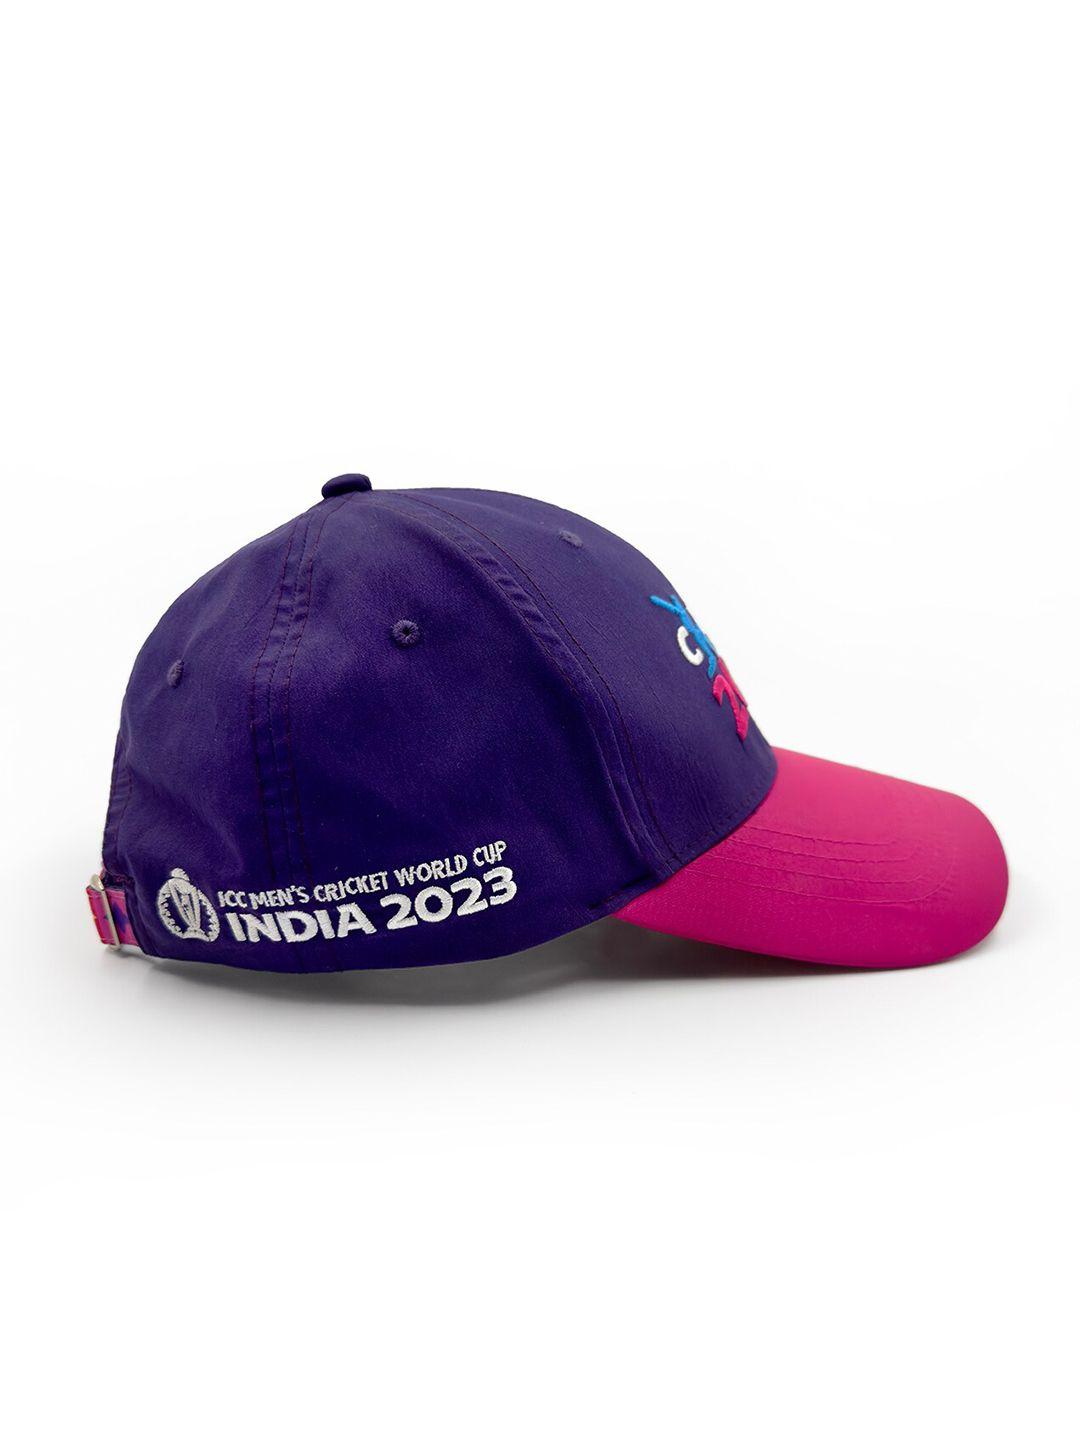 fancode unisex embroidered baseball cap